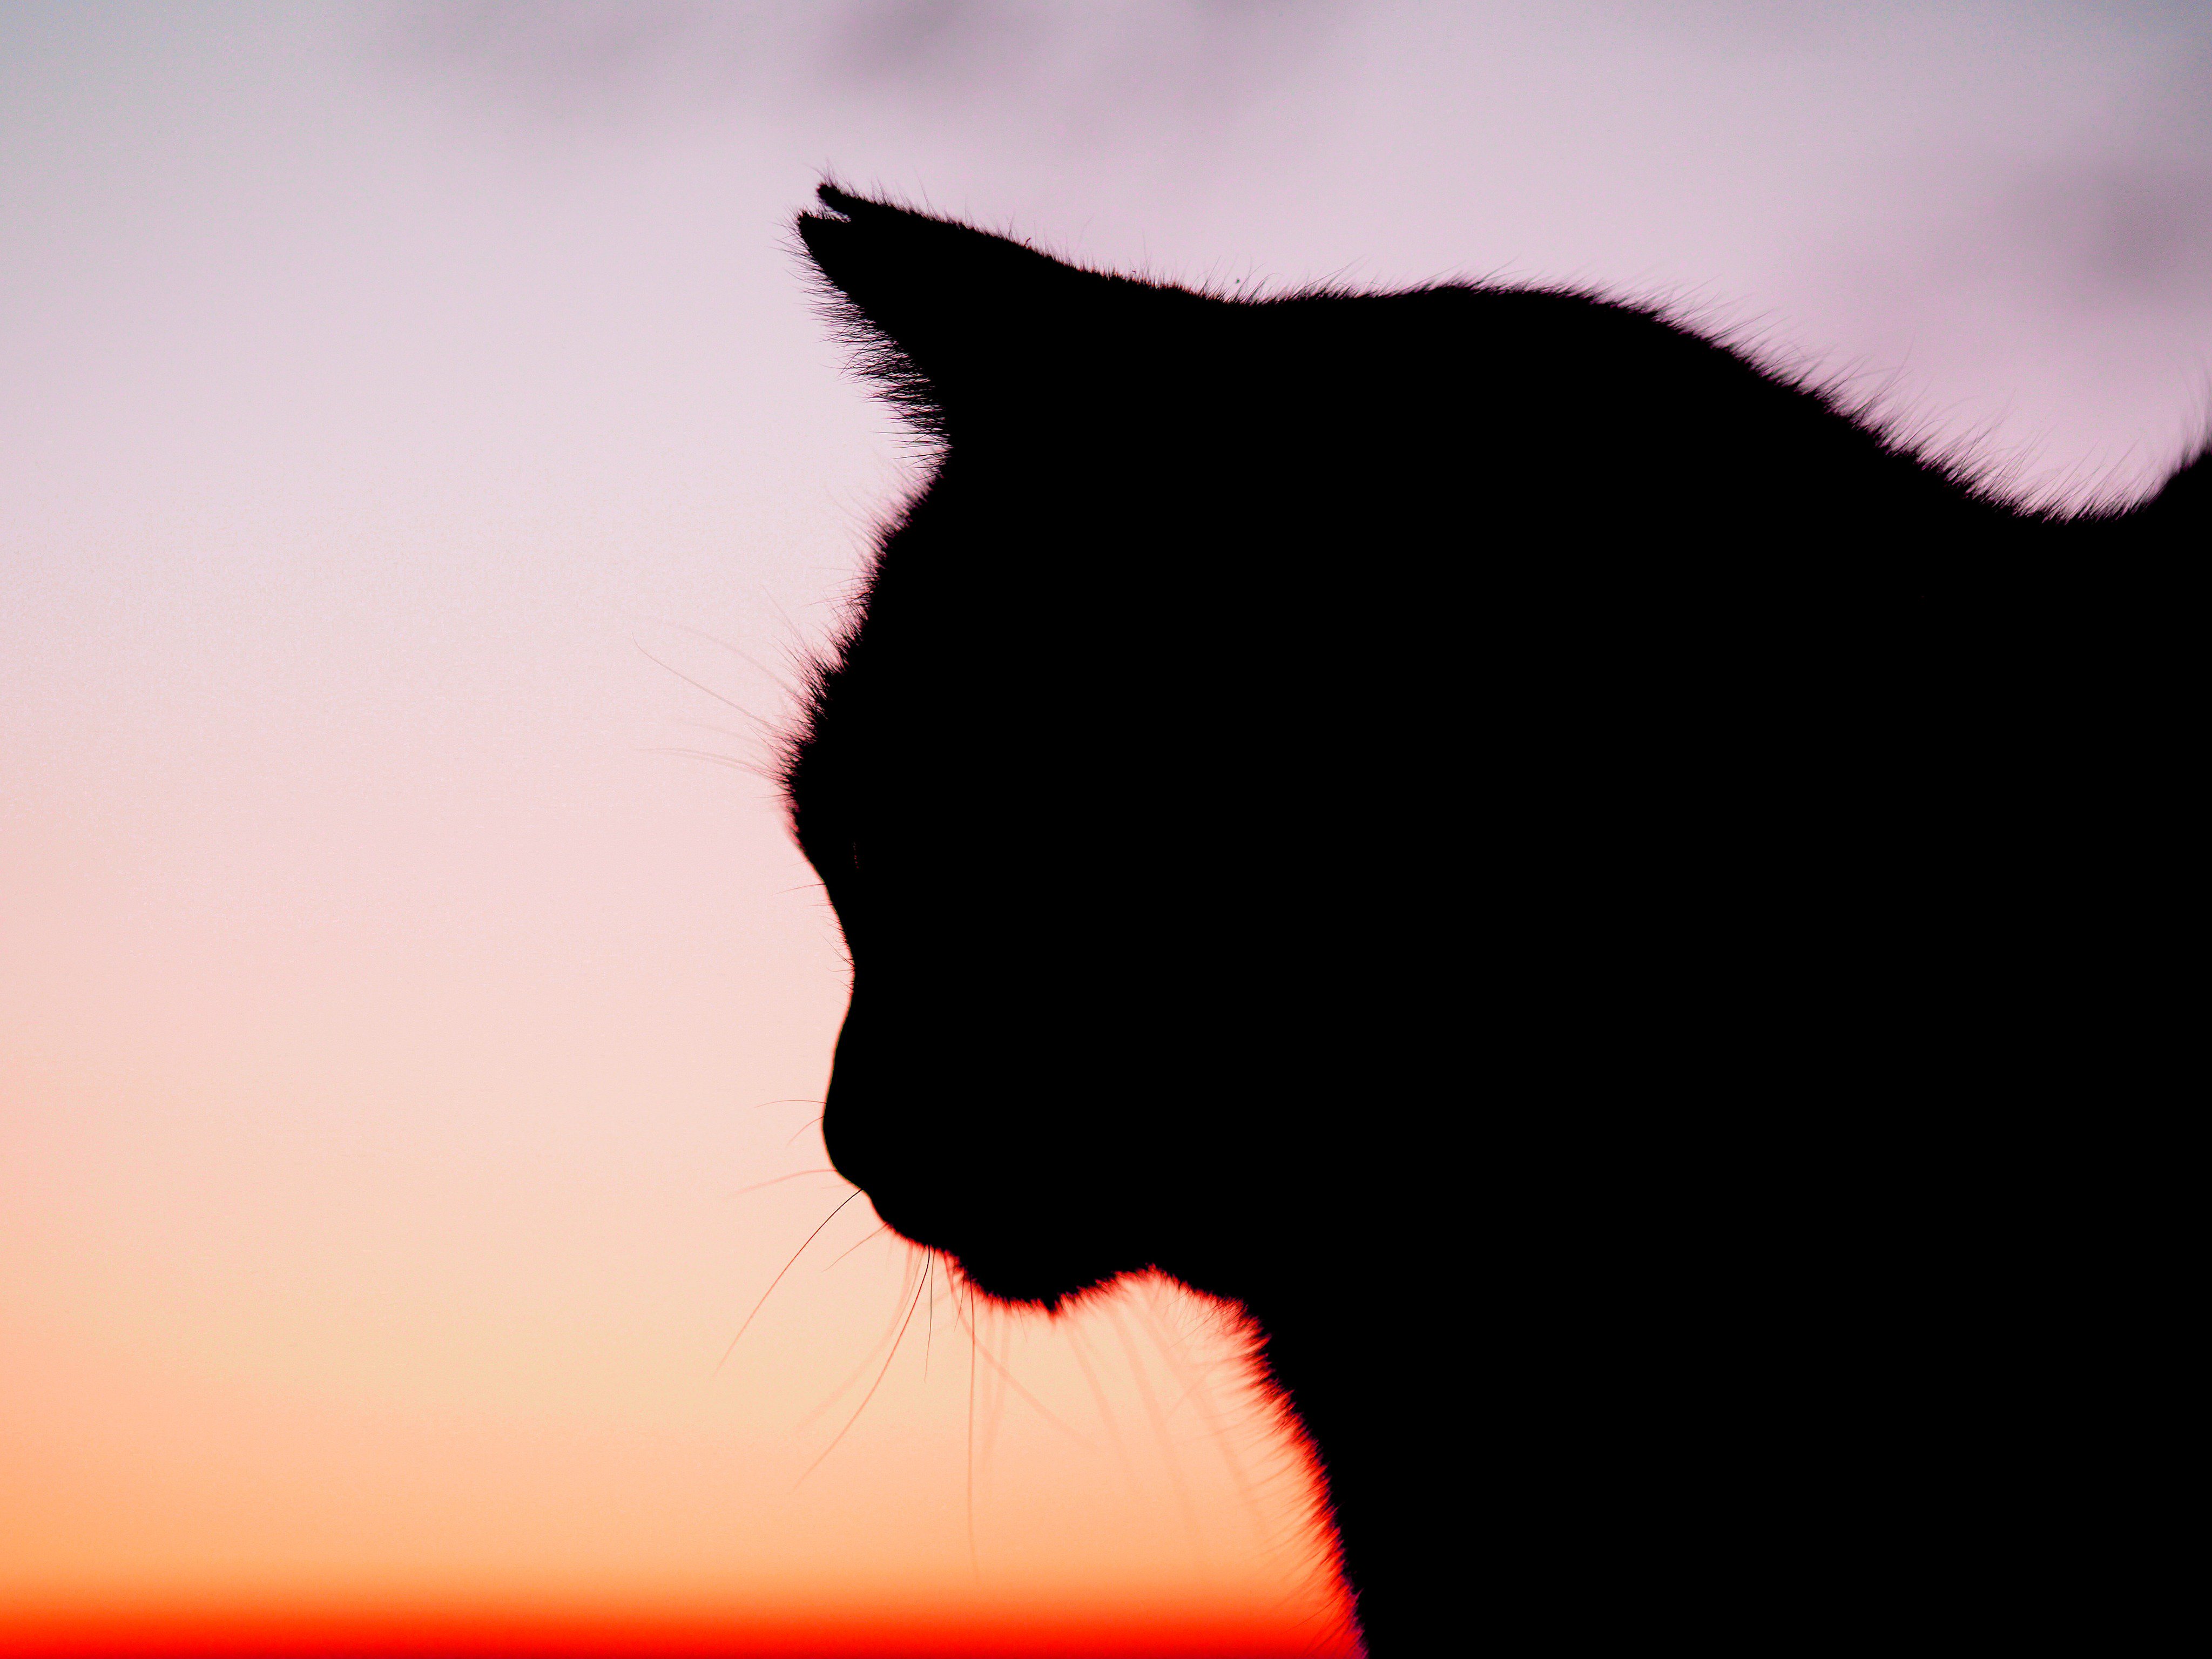 Yaeck 一緒に夕日を眺めてました 夕日 夕焼け 猫好きさんと繋がりたい 猫 Sunset 写真で伝えたい私の世界 Olympuspen T Co Db6zx8eqwj Twitter